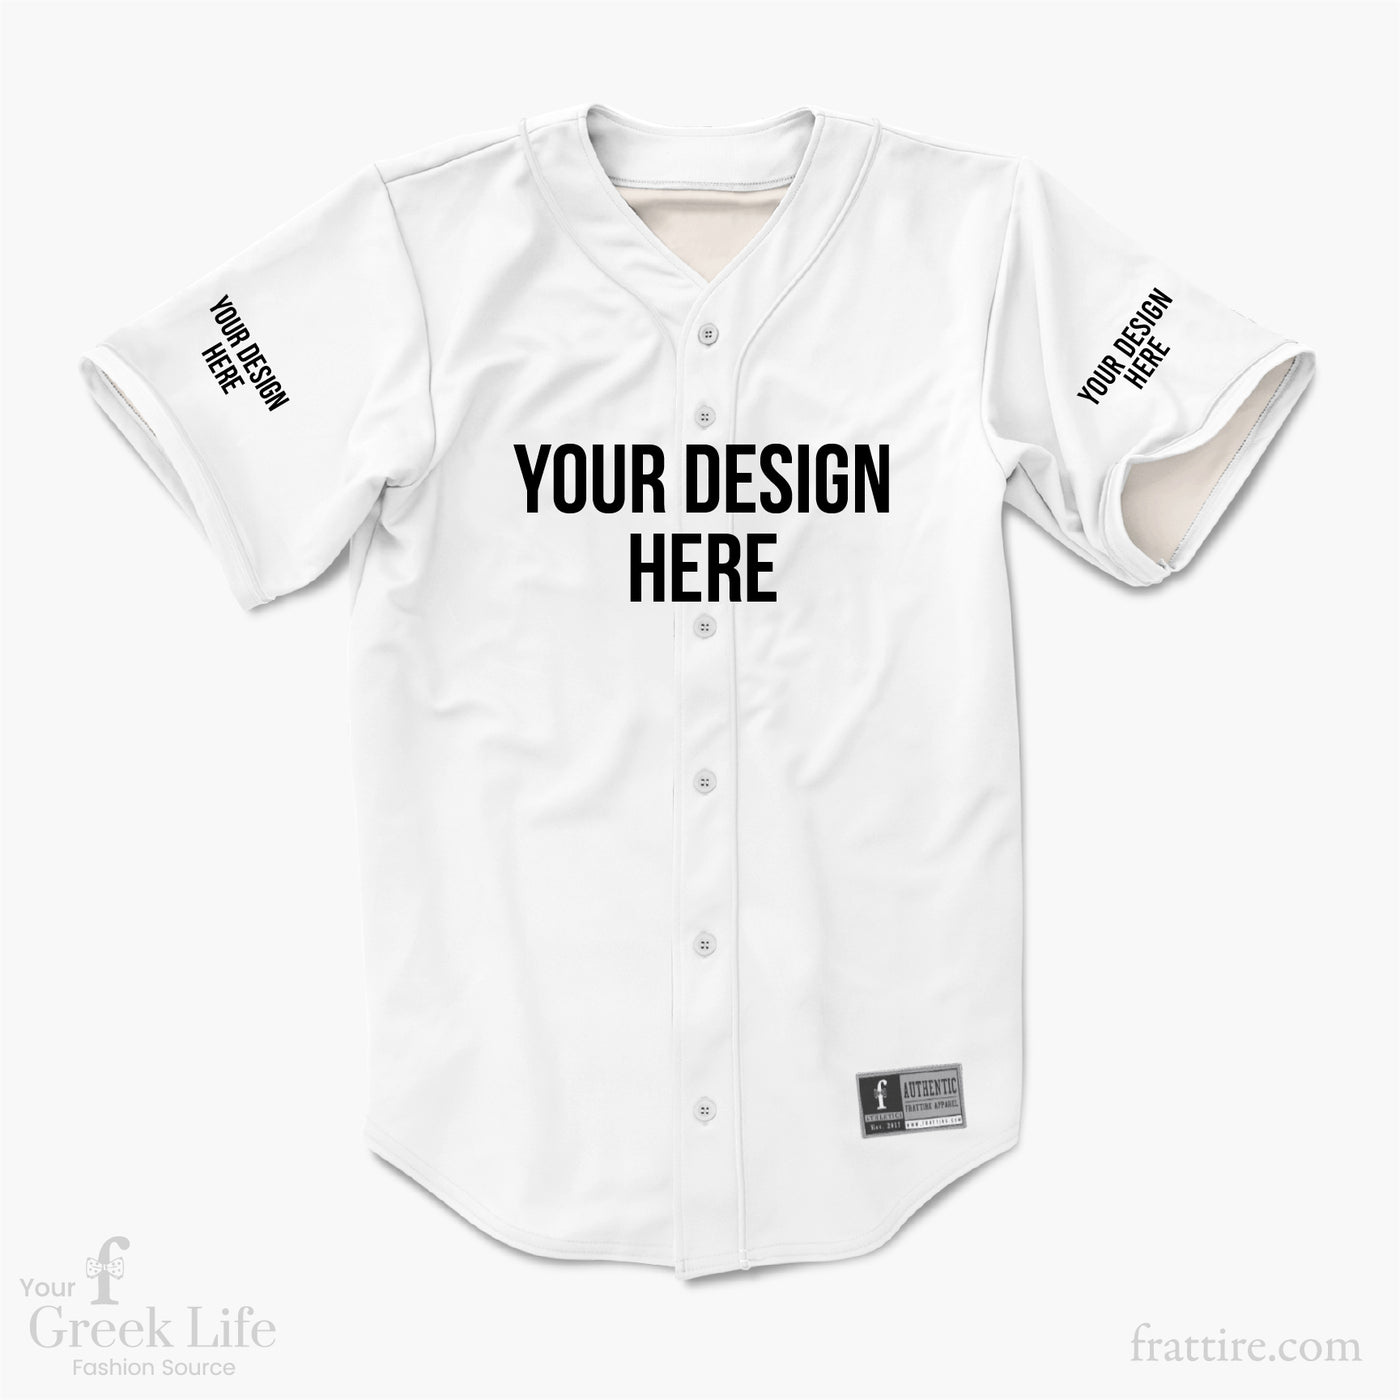 Custom Baseball Jerseys - Make Authentic Team Baseball Jerseys